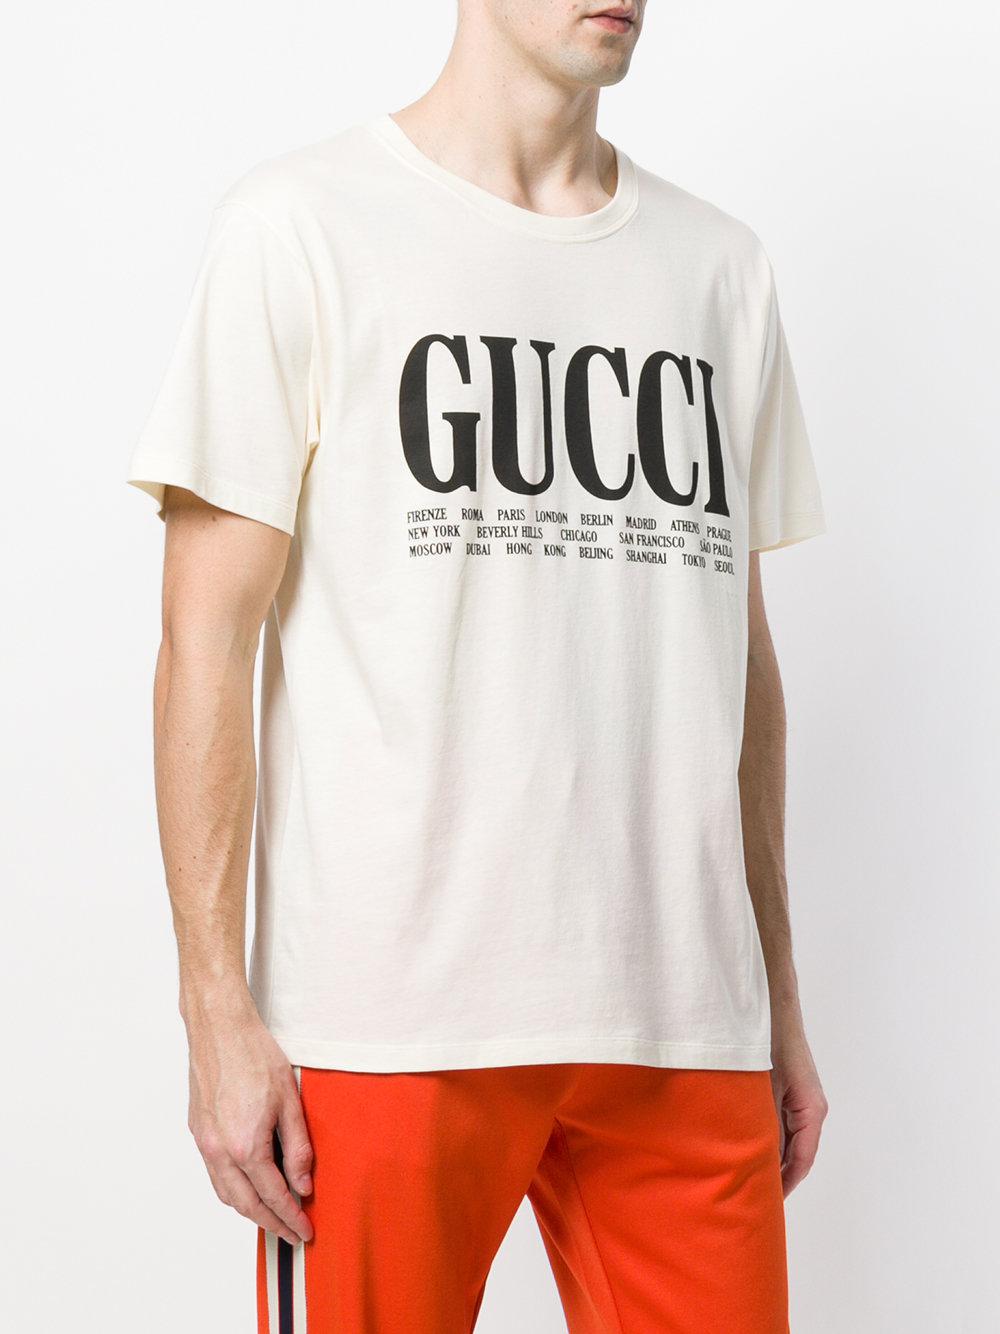 ーーーー Gucci - GUCCI CITIES WEB 限定 Tシャツの通販 by poppina's shop｜グッチならラクマ けしており